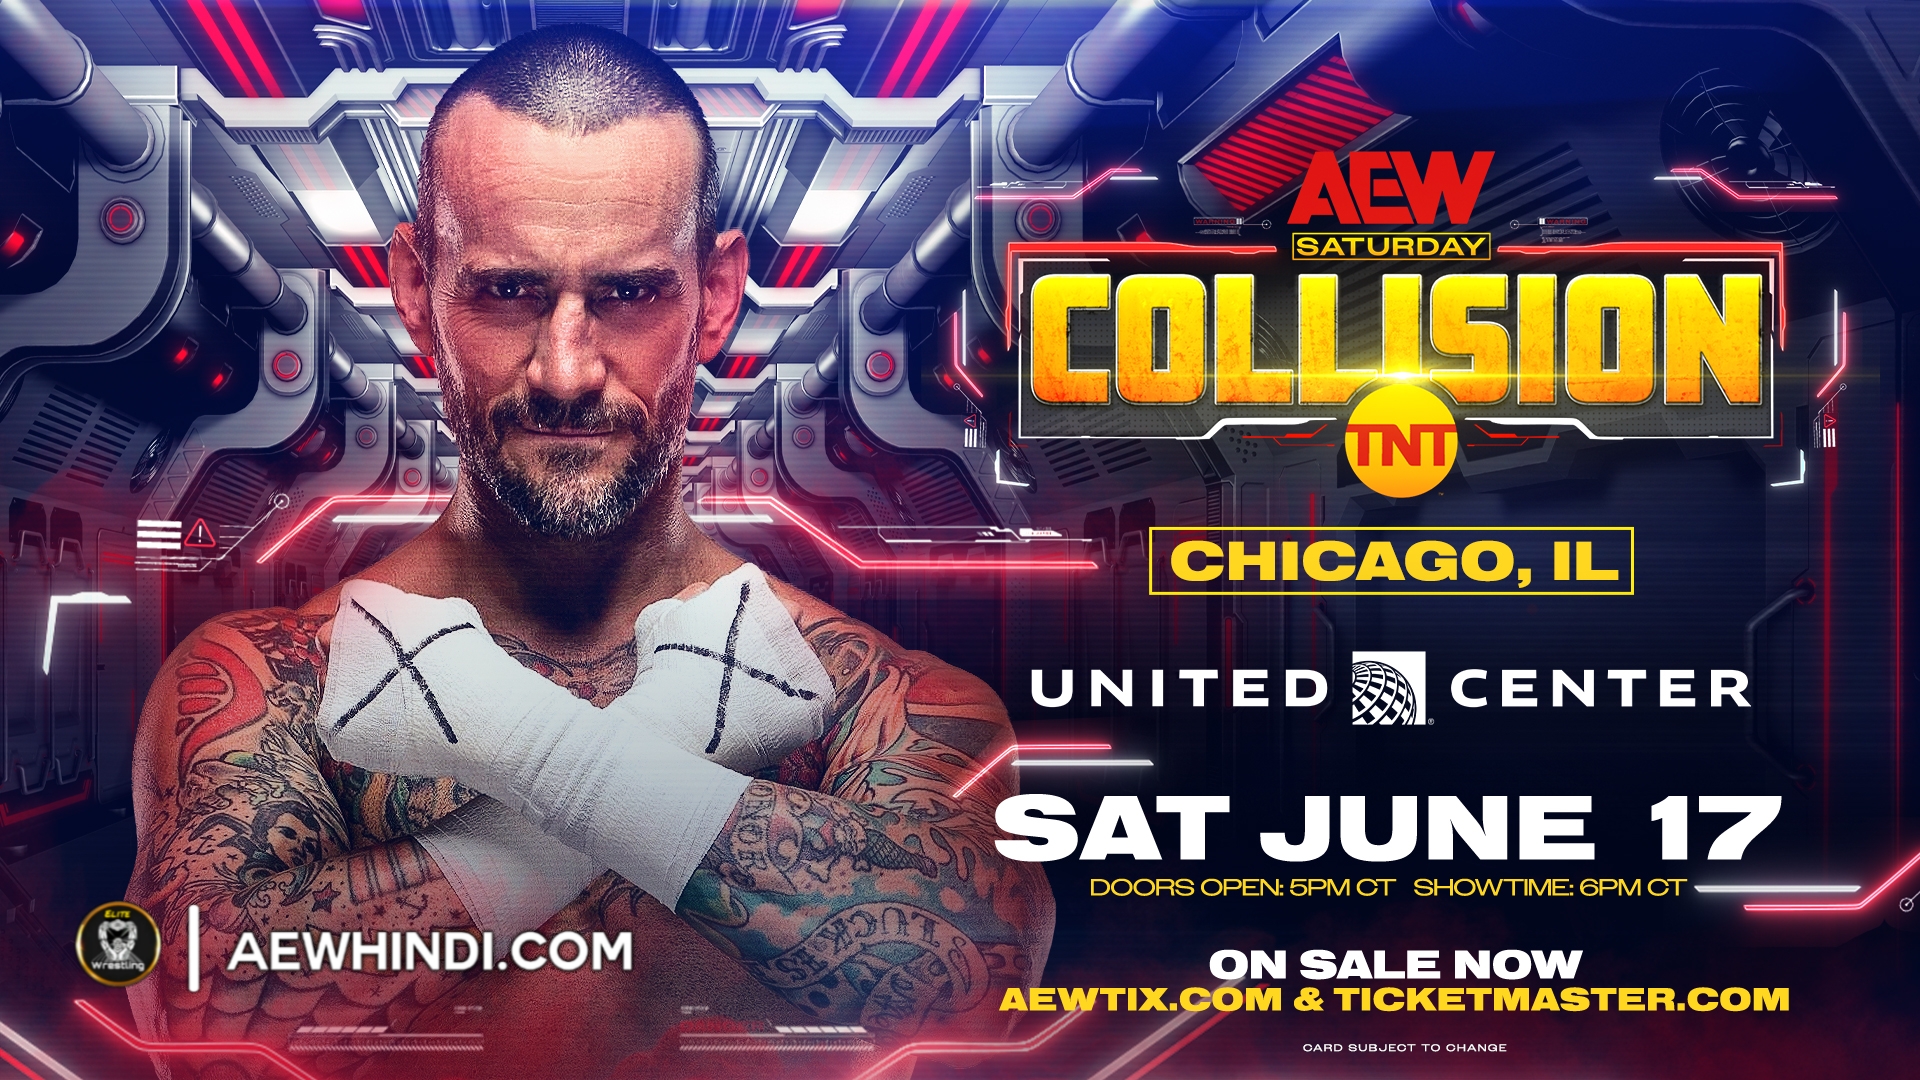 CM Punk RETURN Announced for AEW Collision